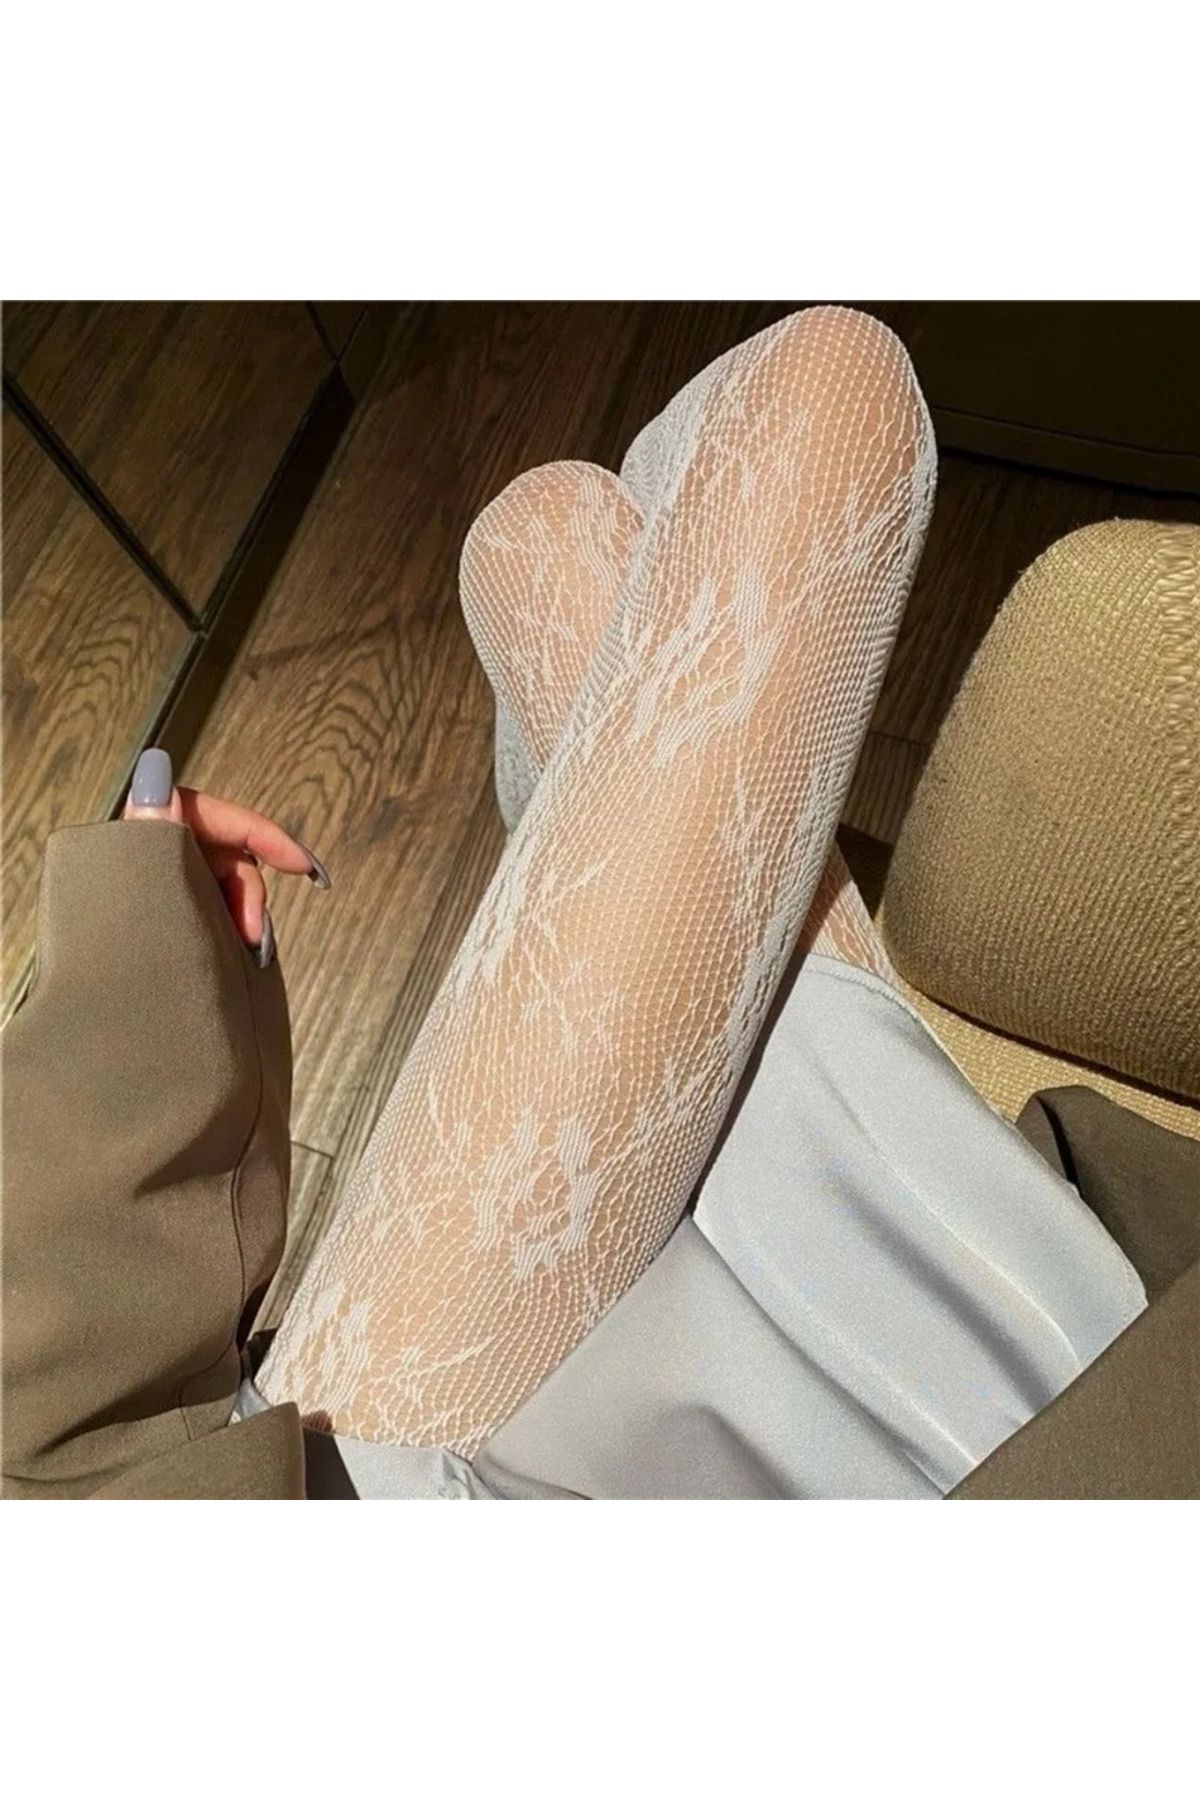 Fashion'S Beyaz Dantel Delikli  Örgü Külotlu Çorap